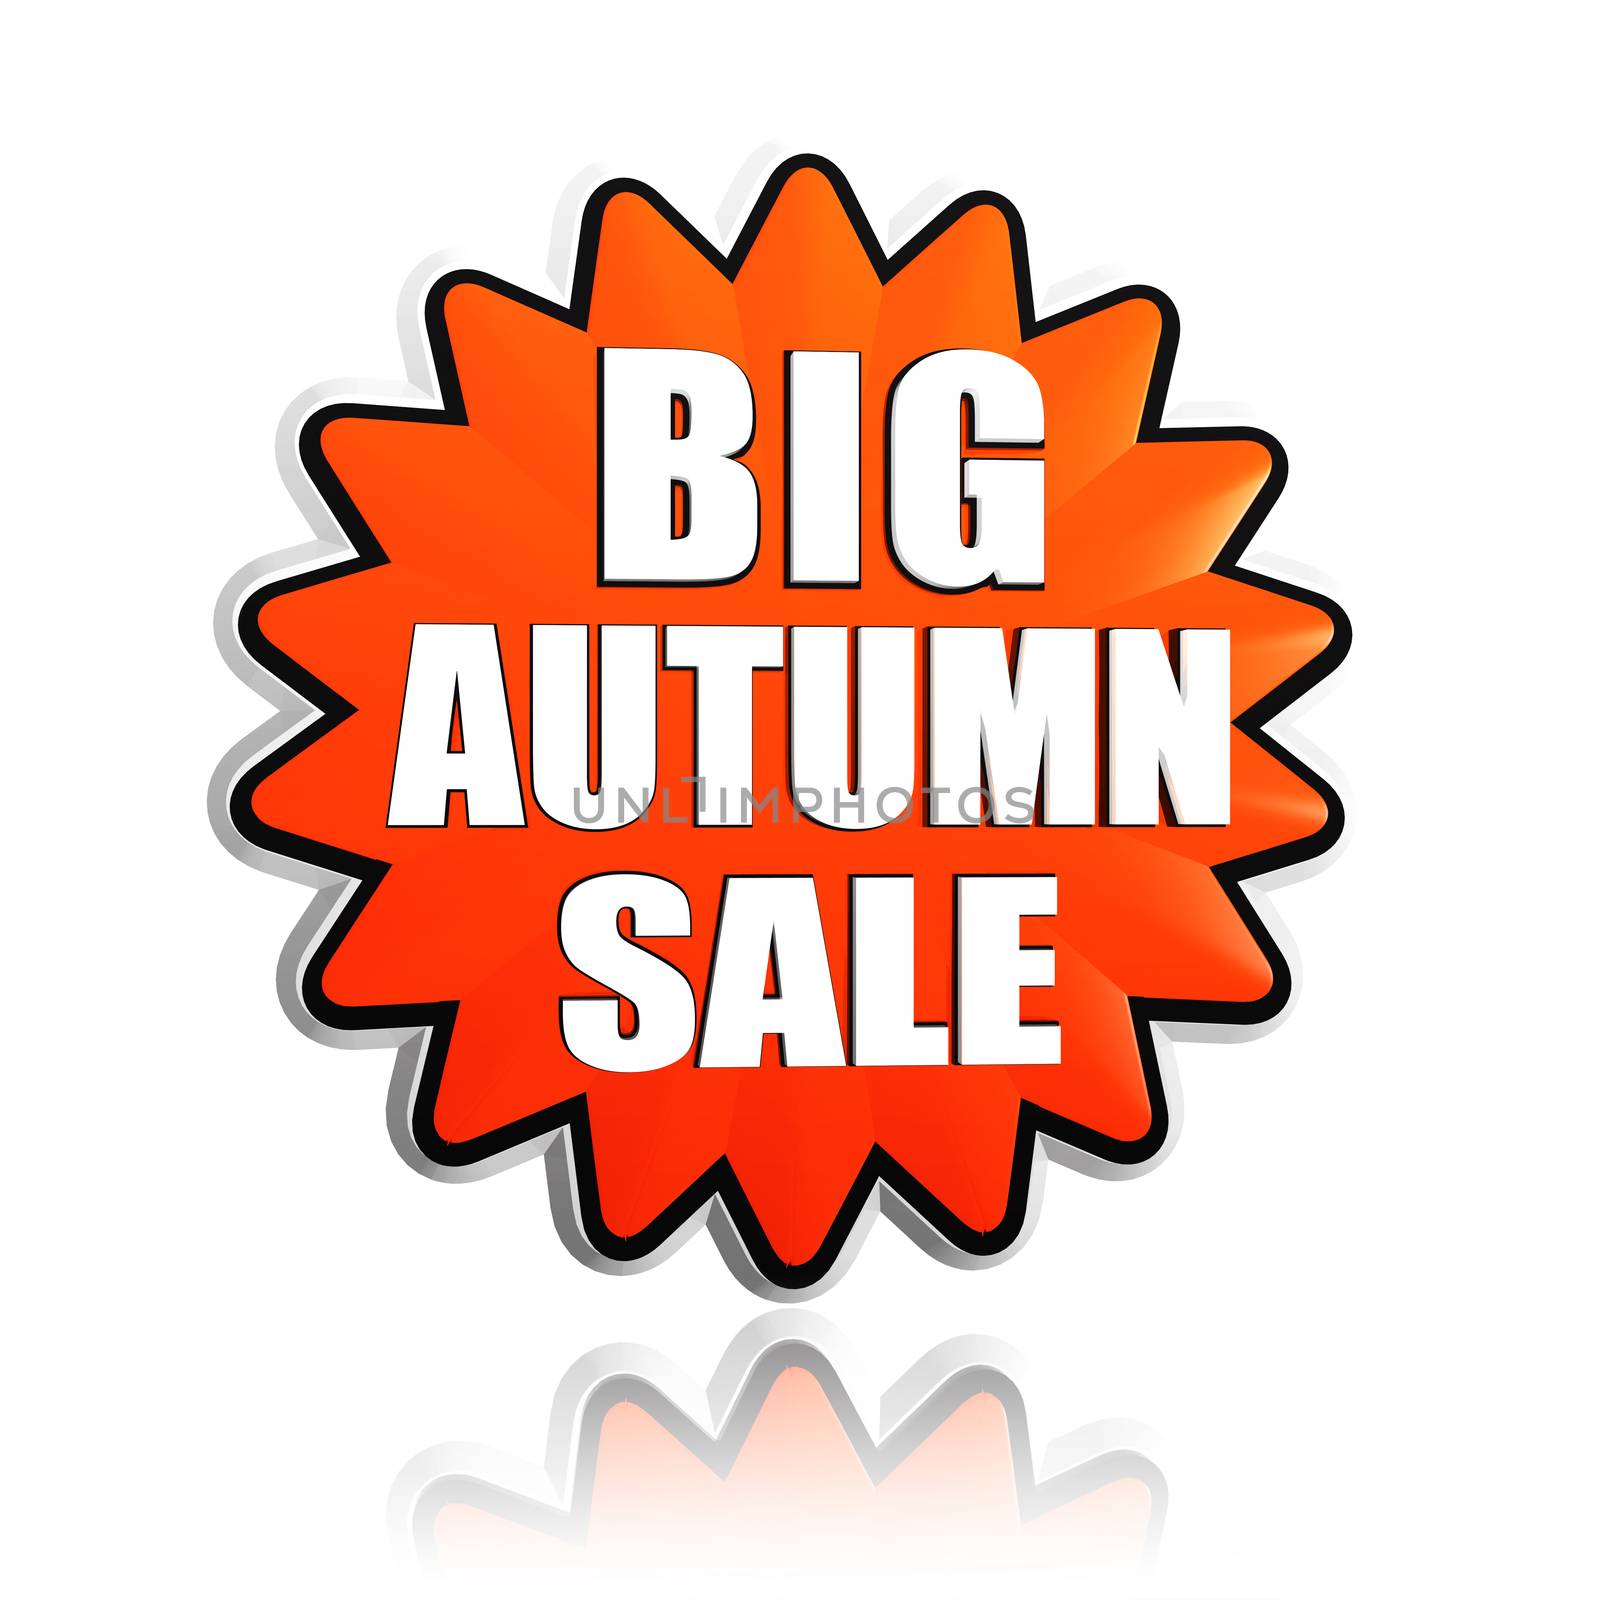 big autumn sale button - 3d orange star banner with white text, business concept